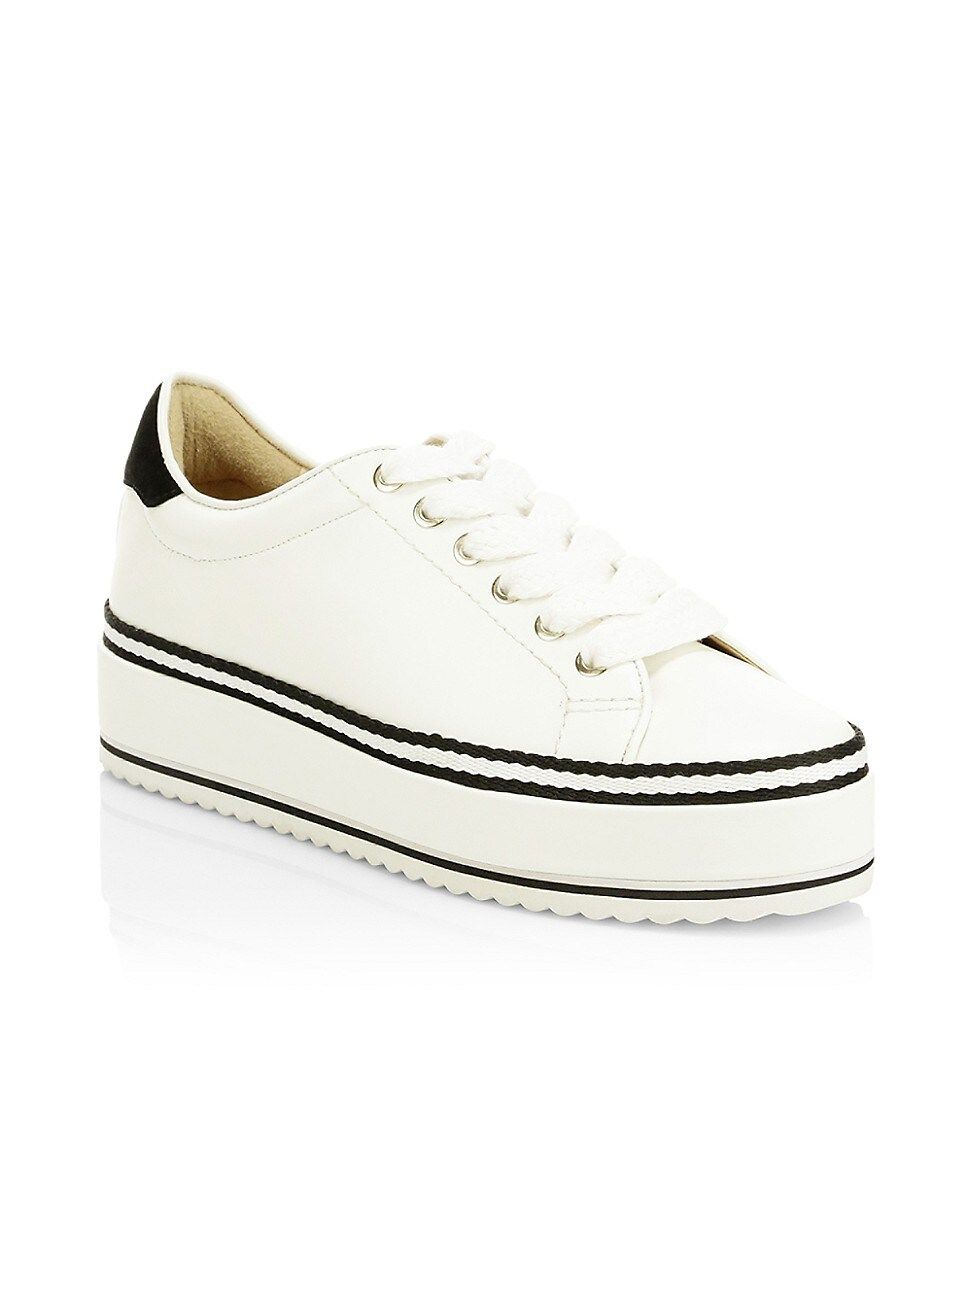 Joie Women's Dabnis Leather Flatform Sneakers - White - Size 11 | Saks Fifth Avenue